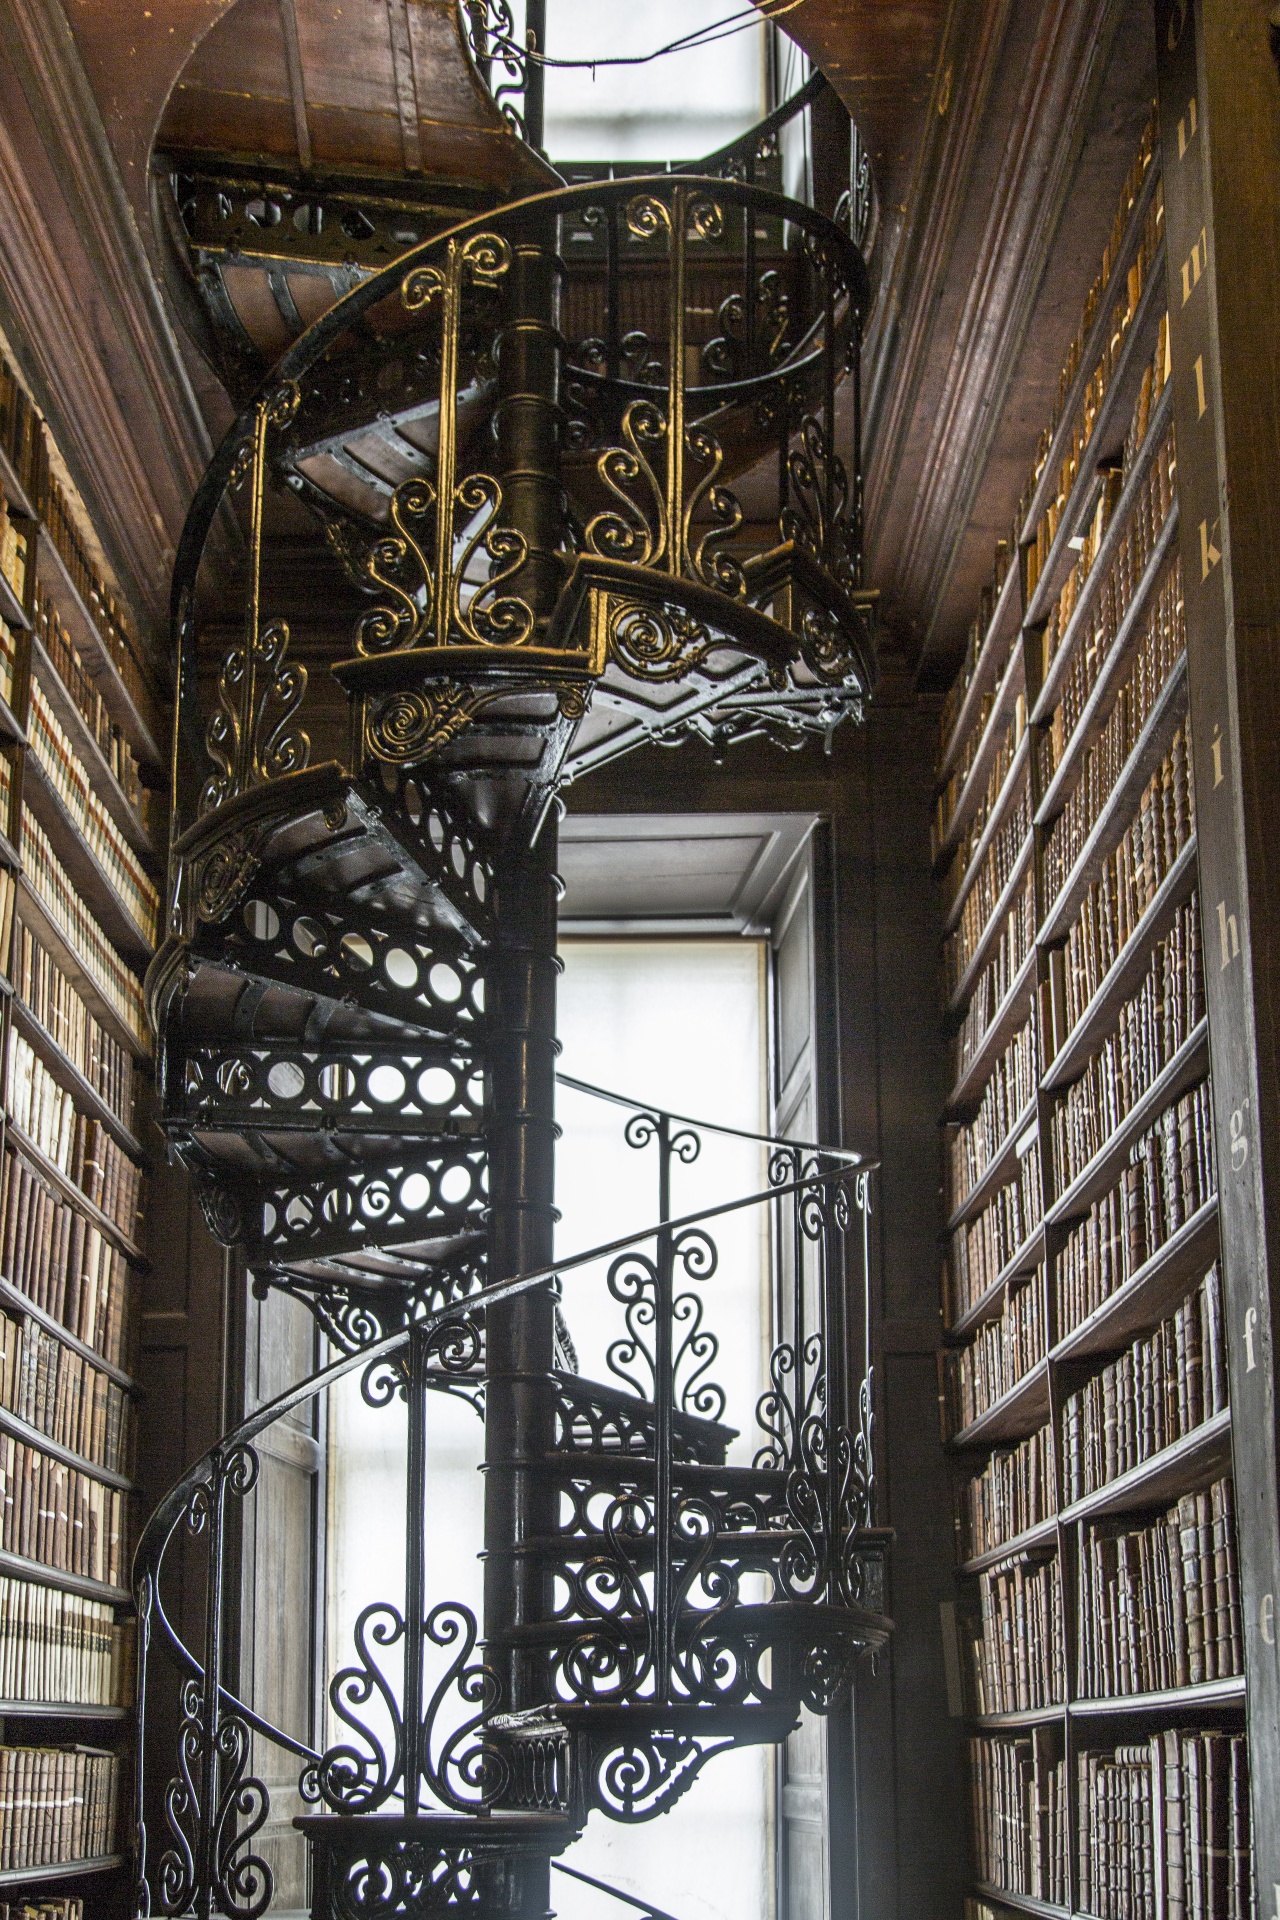 Biblioteca no Trinity College